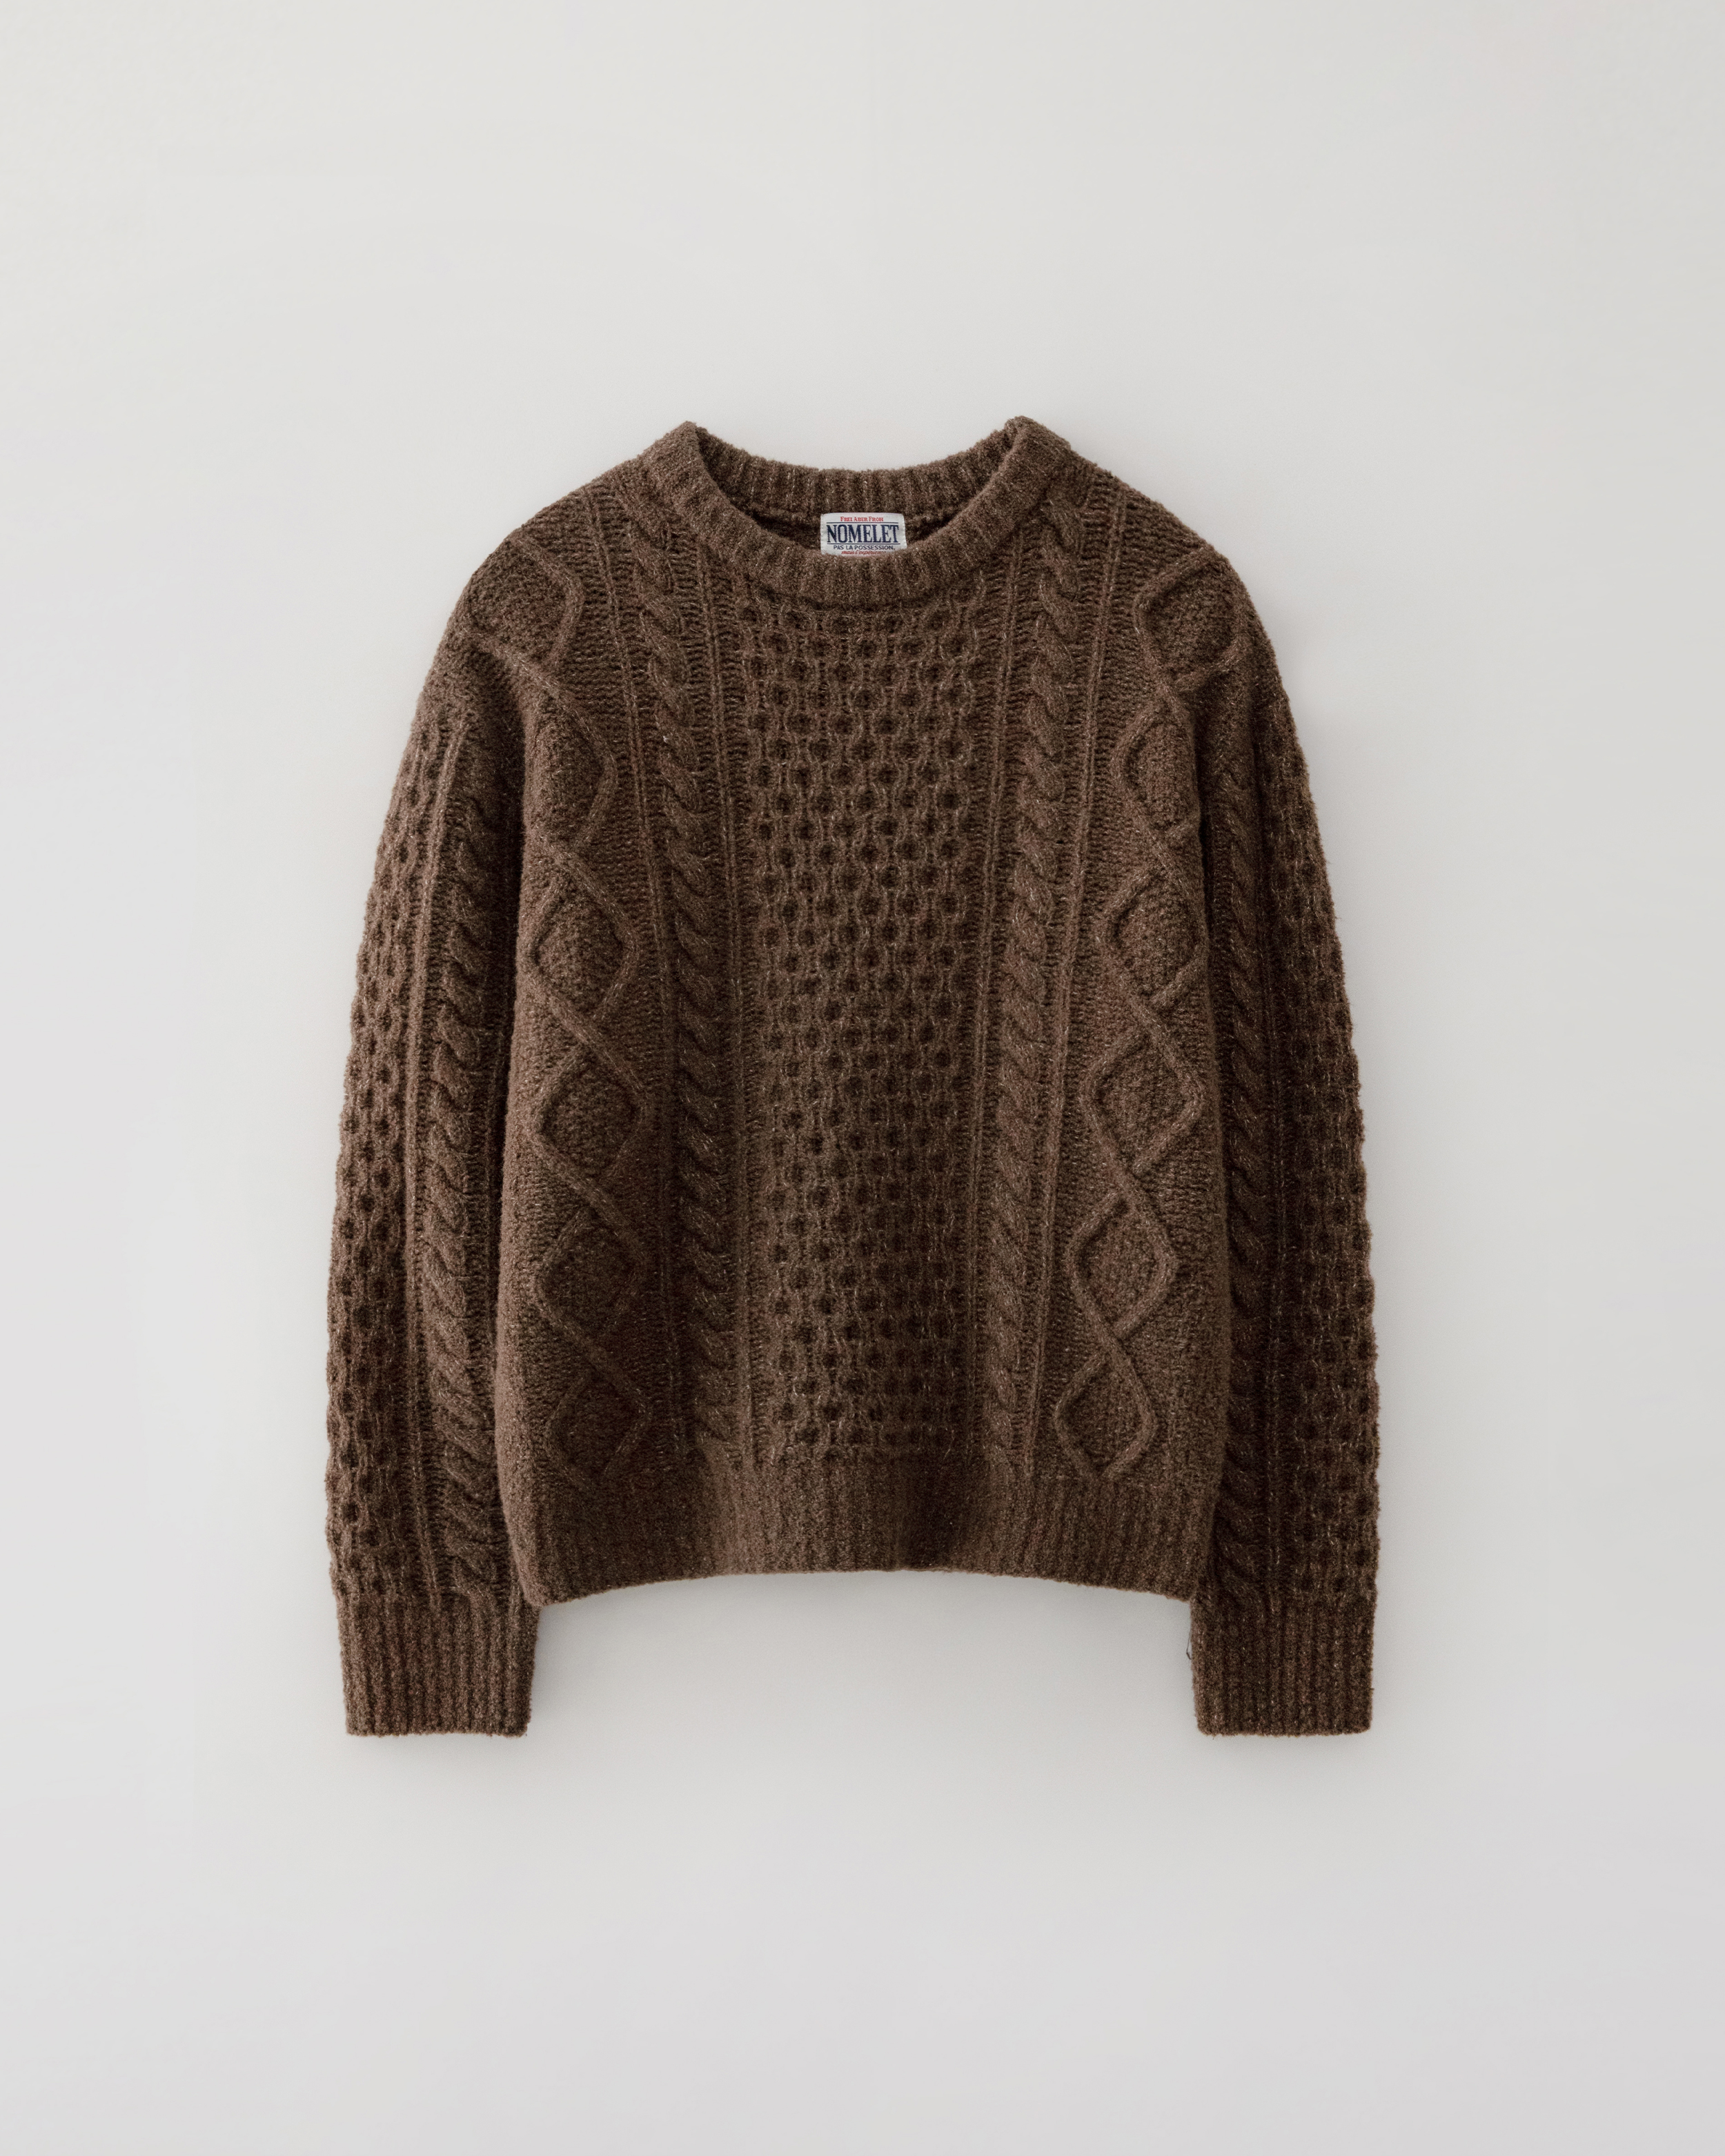 Carol fisherman sweater - brownie